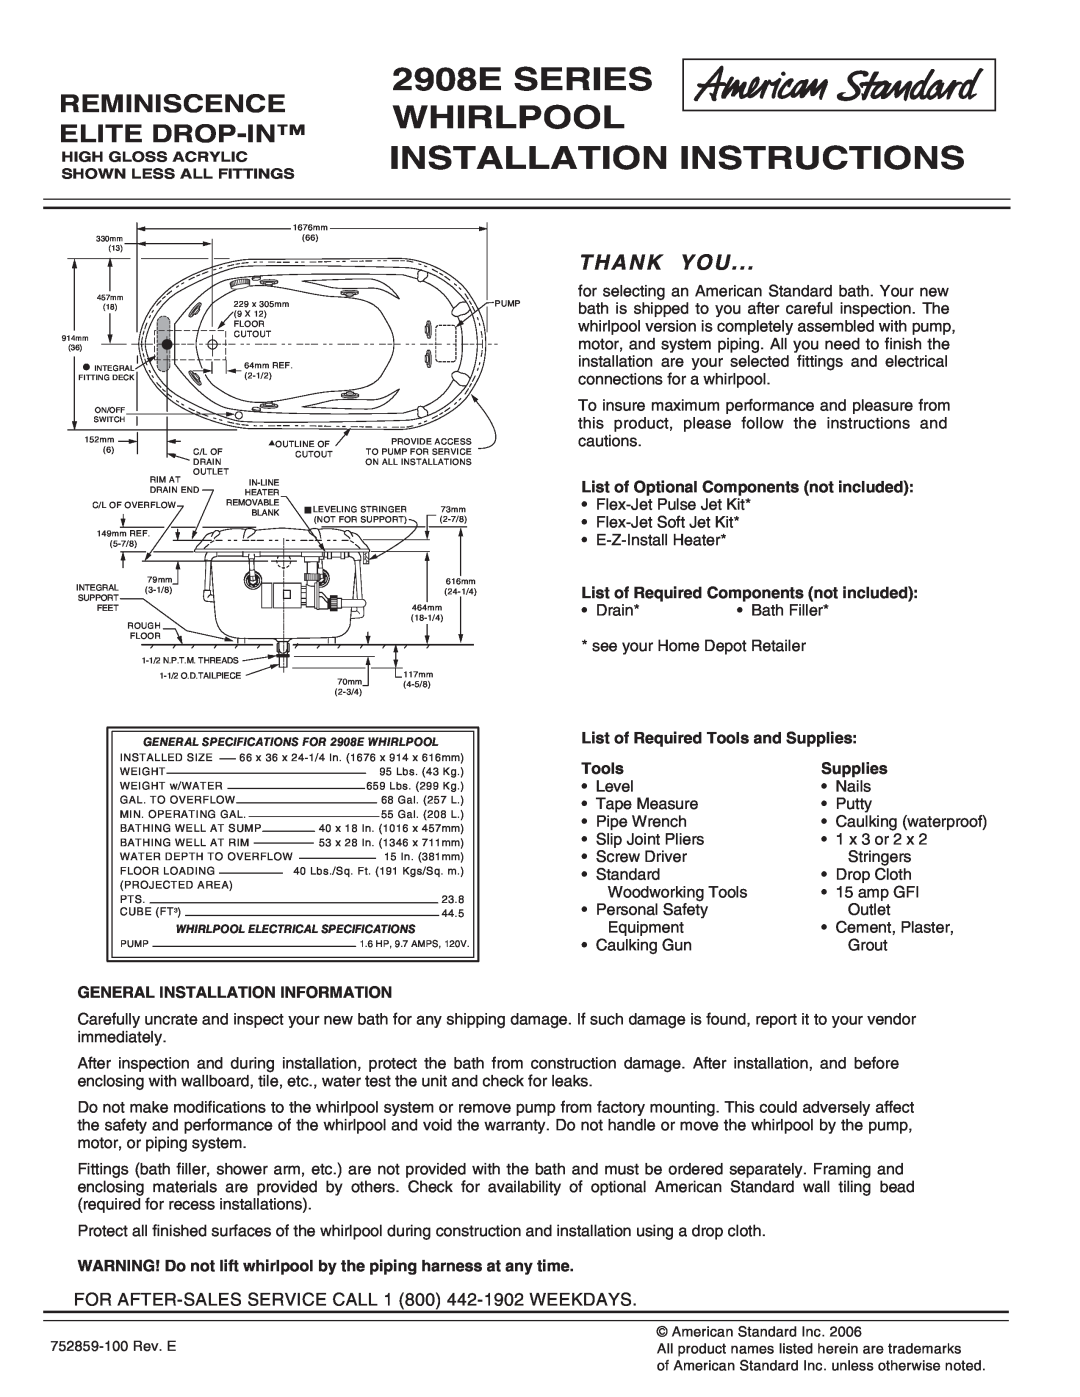 American Standard 2908EC installation instructions 2908E SERIES WHIRLPOOL INSTALLATION INSTRUCTIONS, Thank You, Tools 